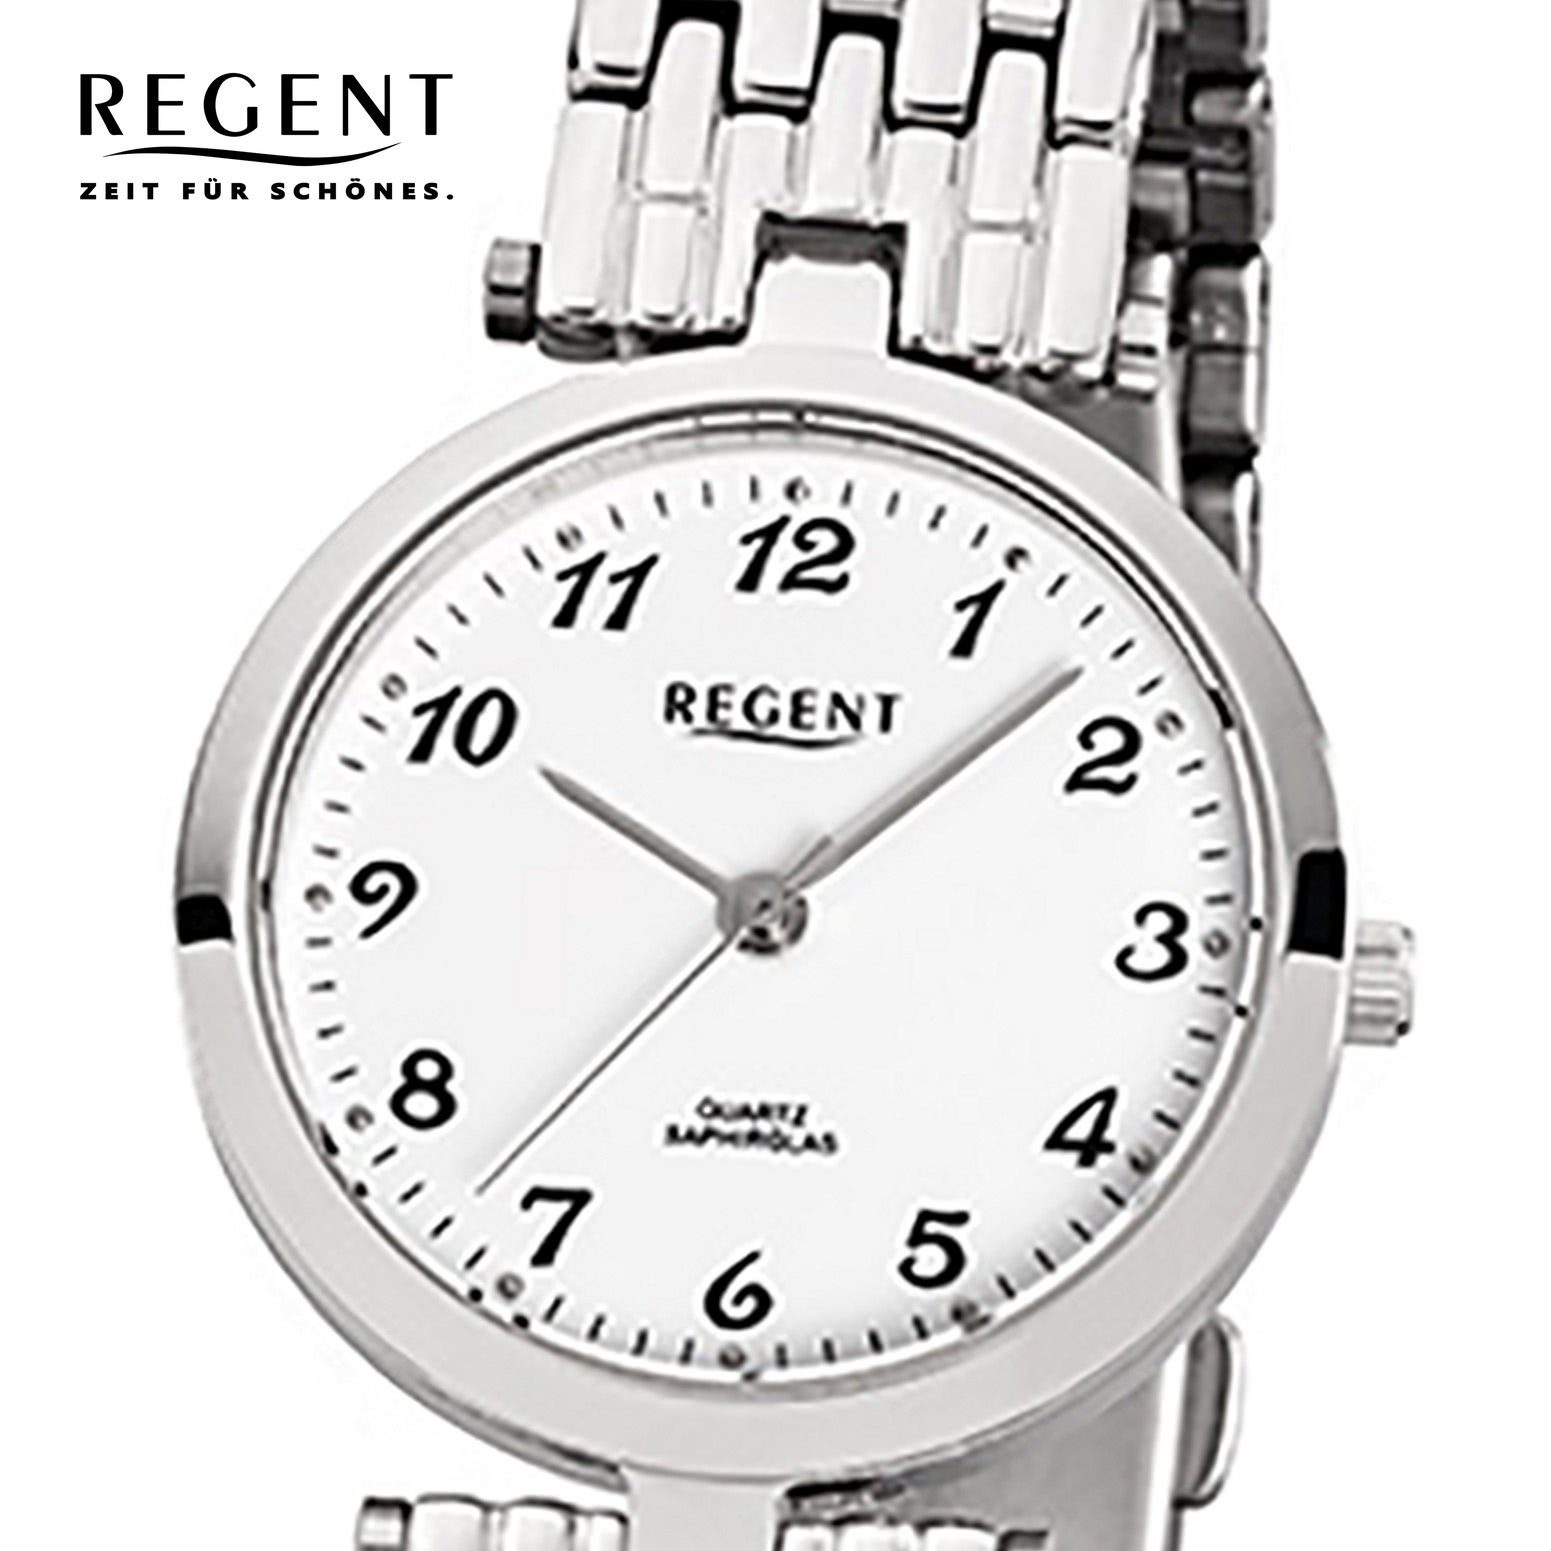 Regent Quarzuhr Regent Damen-Armbanduhr Armbanduhr F-908, klein Damen (ca. Edelstahlarmband silber Analog rund, 28mm)